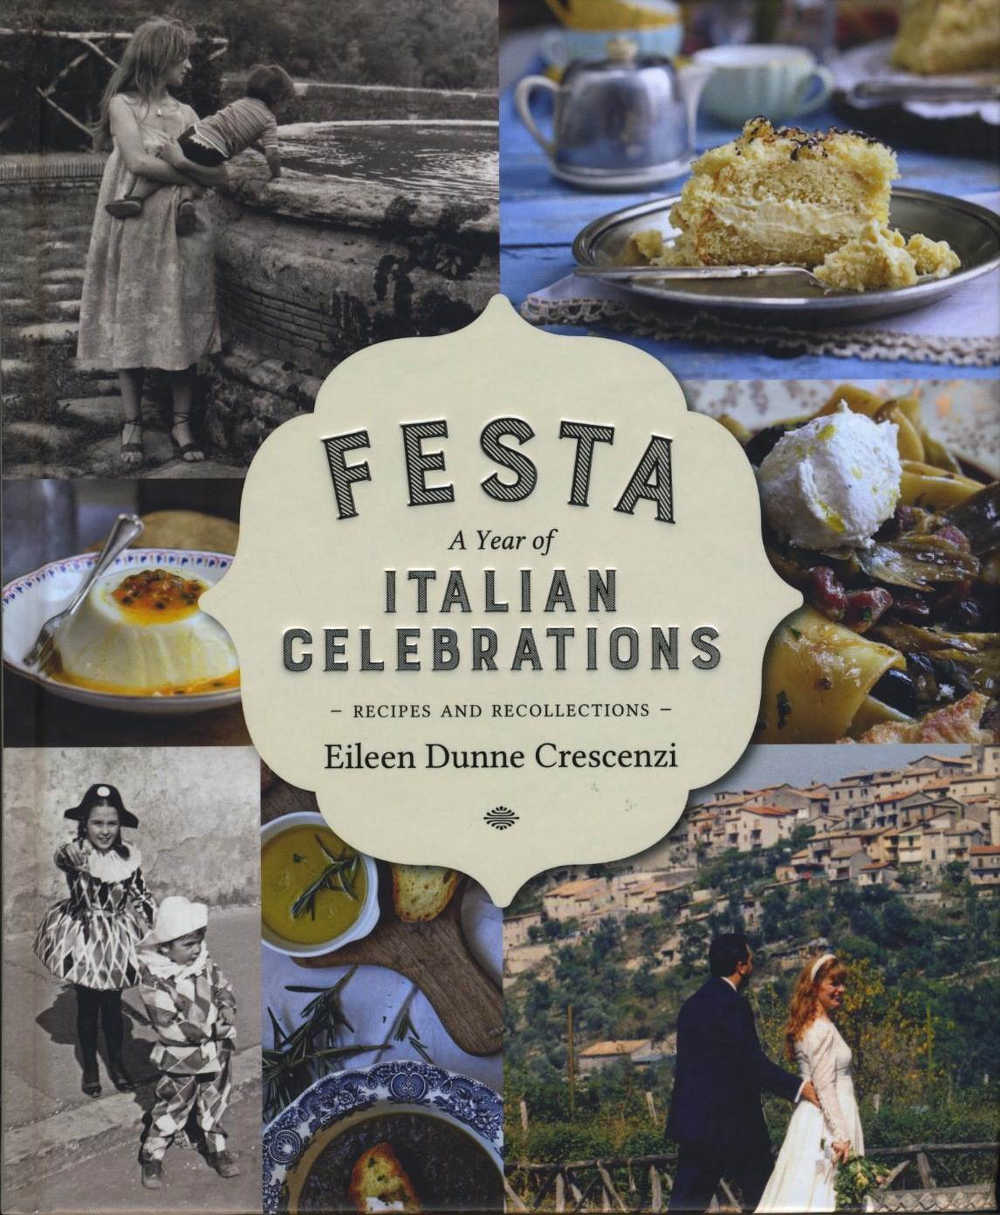 Festa, A Year of Italian Celebrations by Eileen Dunne Crescenzi (Gill & Macmillan hardback, €24.99)